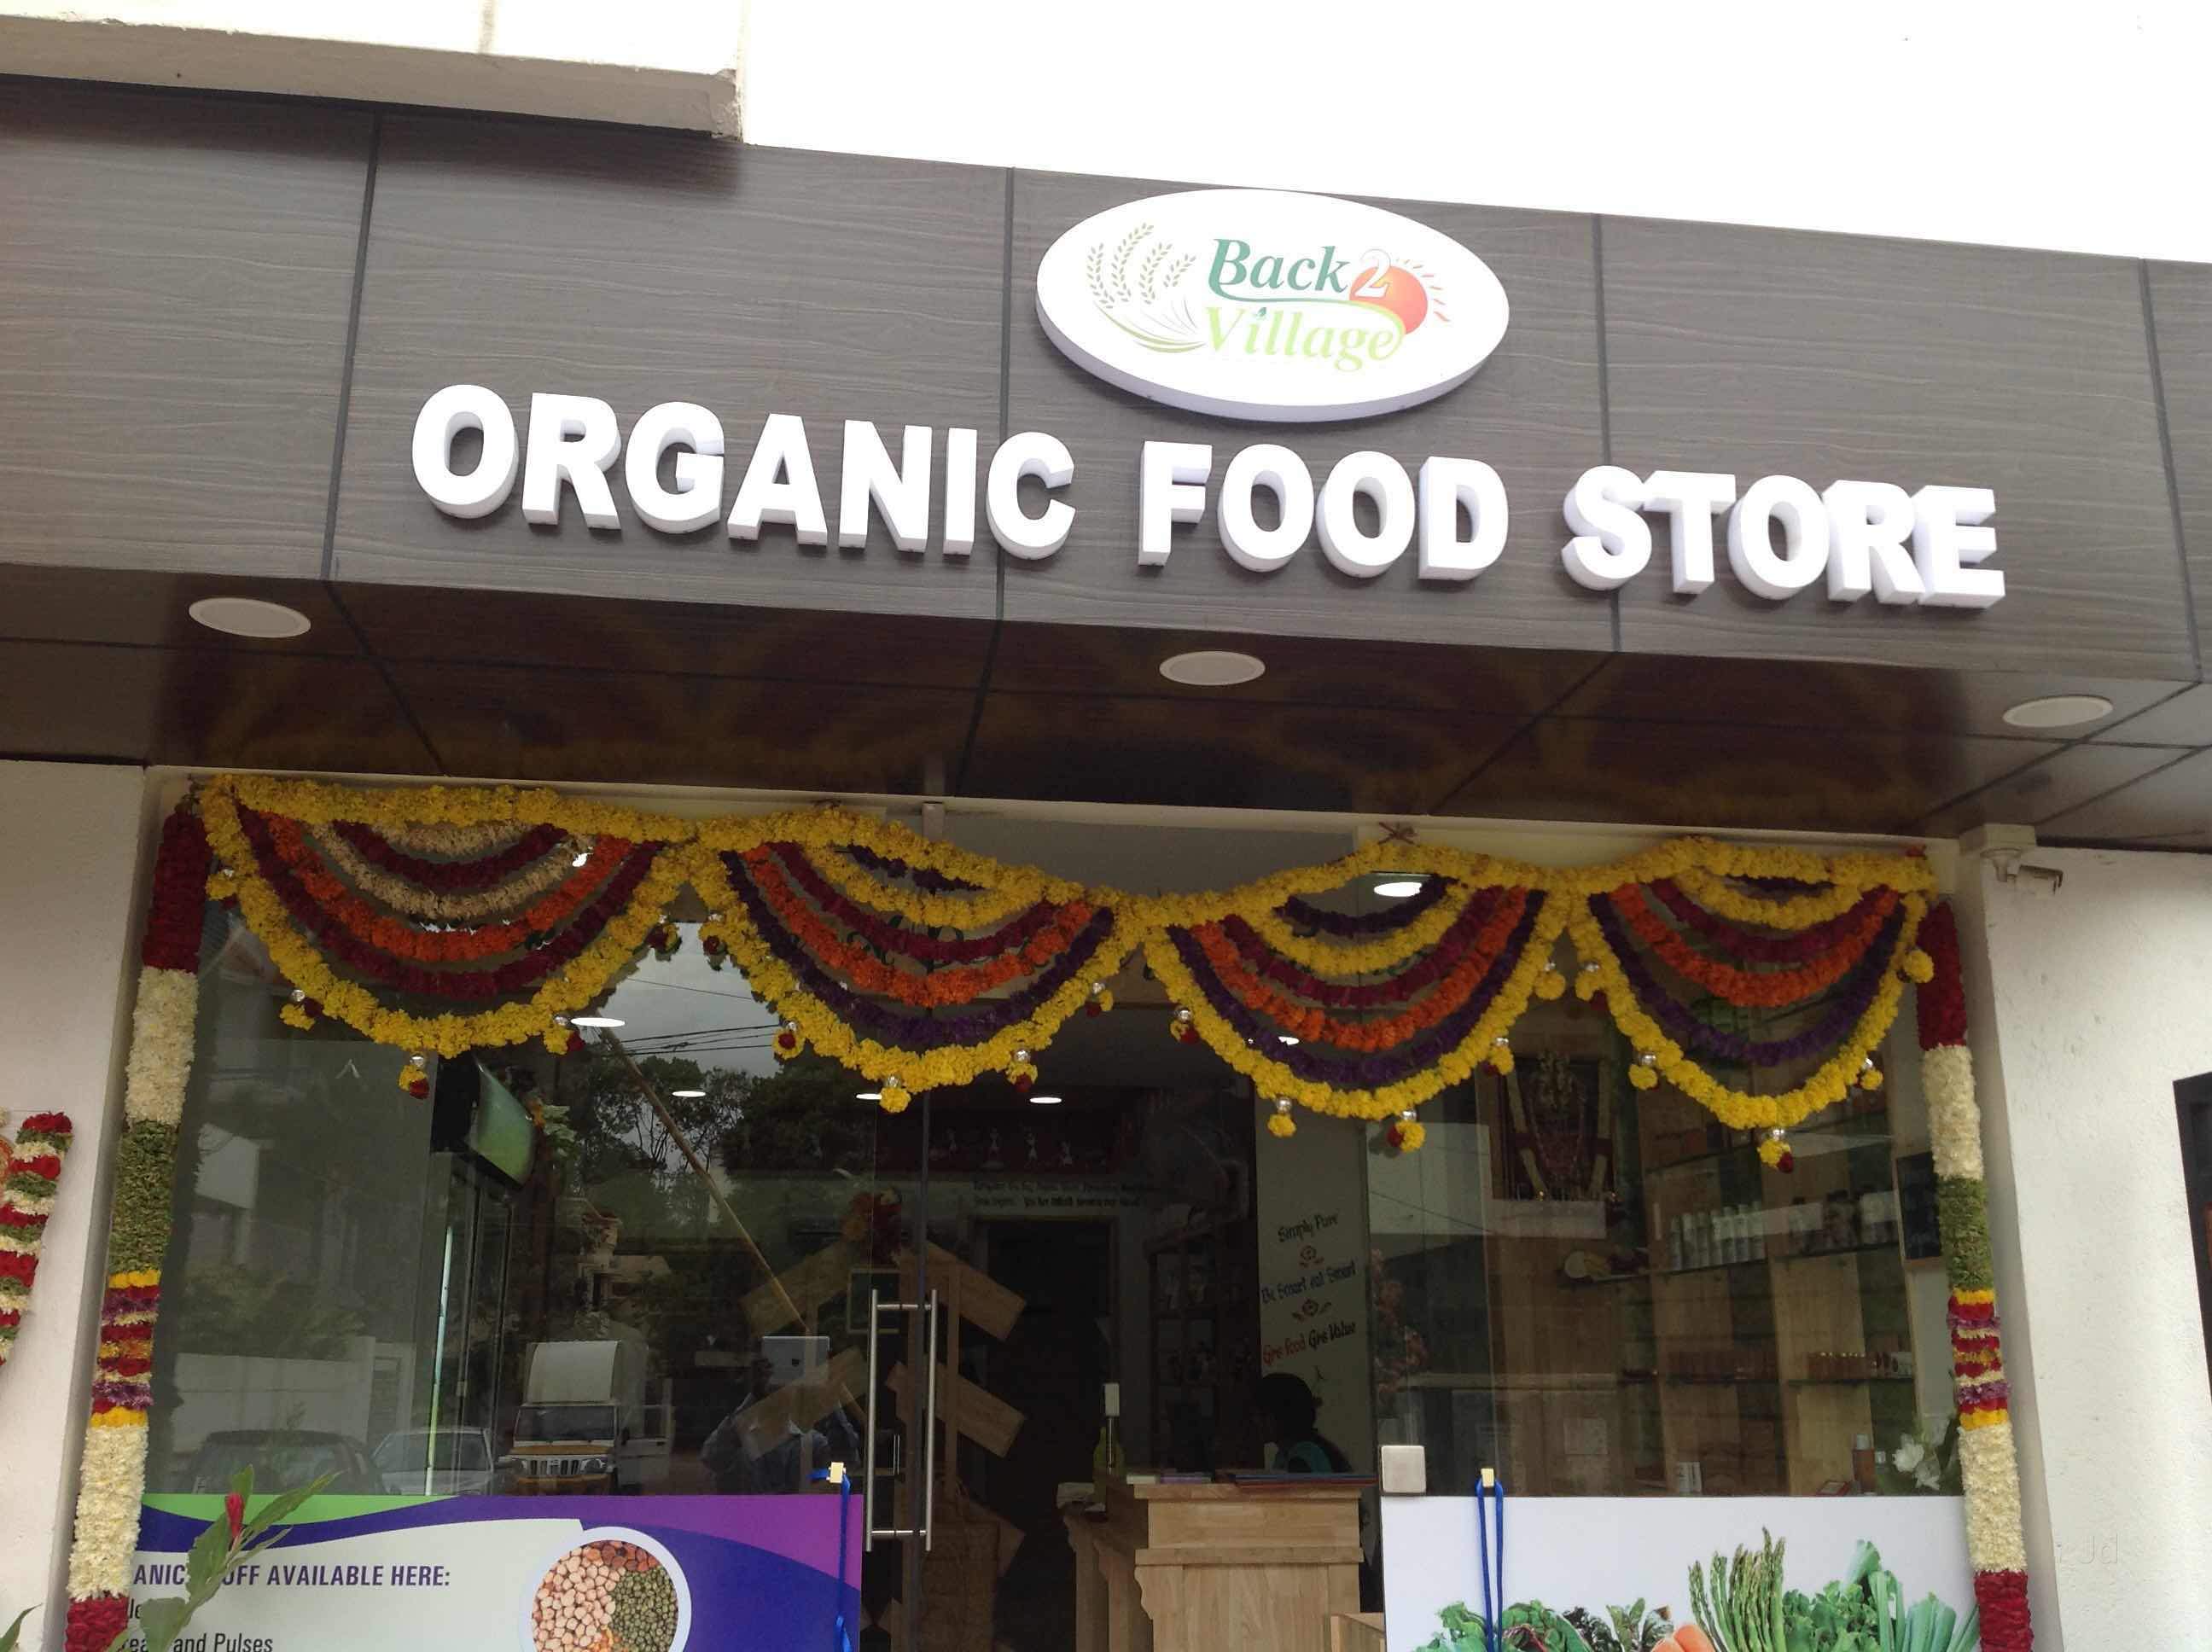 back2-village-cunningham-road-bangalore-organic-food-retailers-12bjs